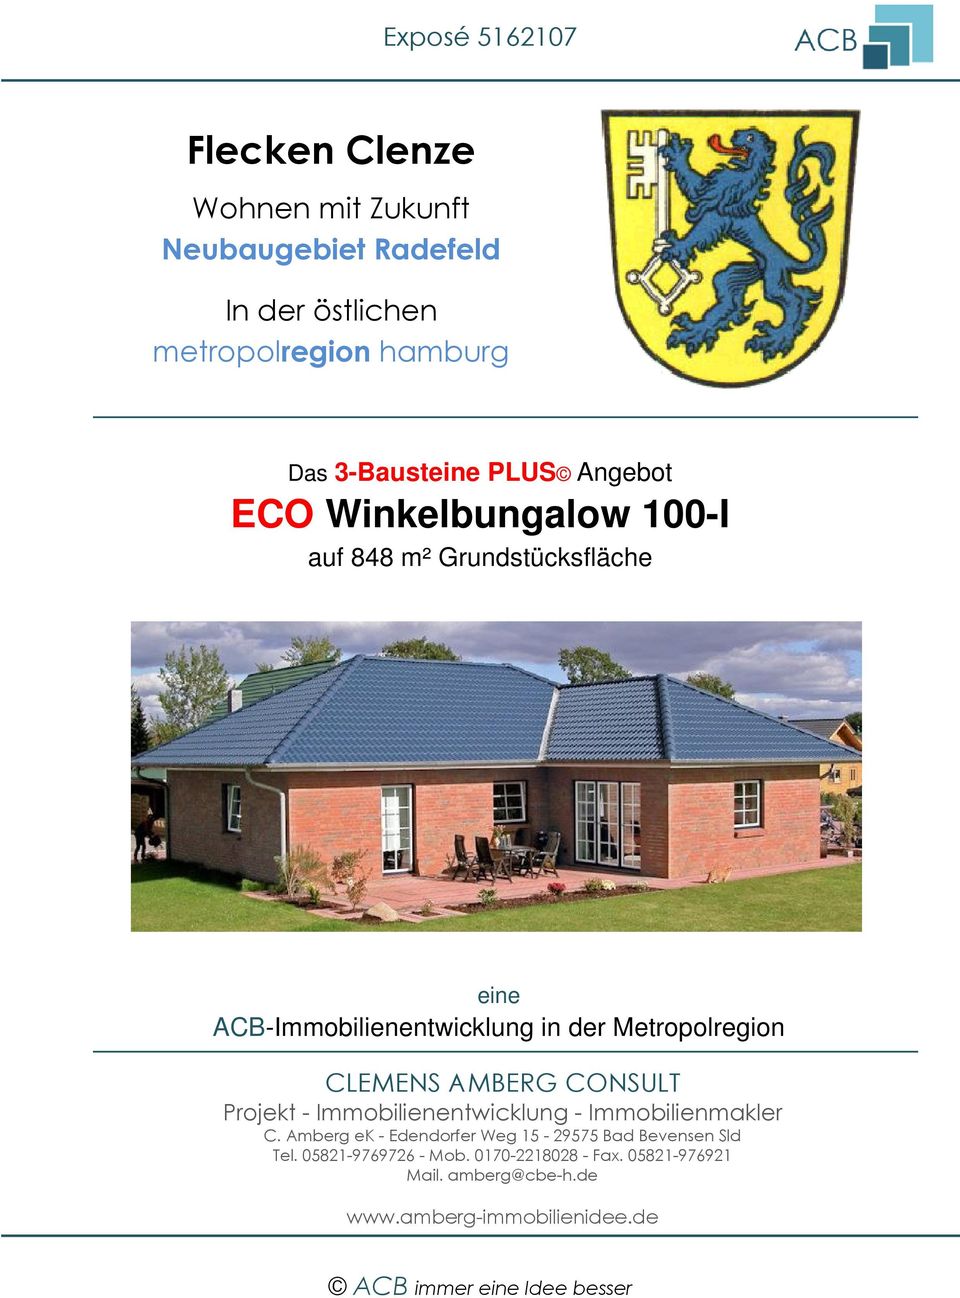 AMBERG CONSULT Projekt - Immobilienentwicklung - Immobilienmakler C. Amberg ek - Edendorfer Weg 15-29575 Bad Bevensen Sld Tel.